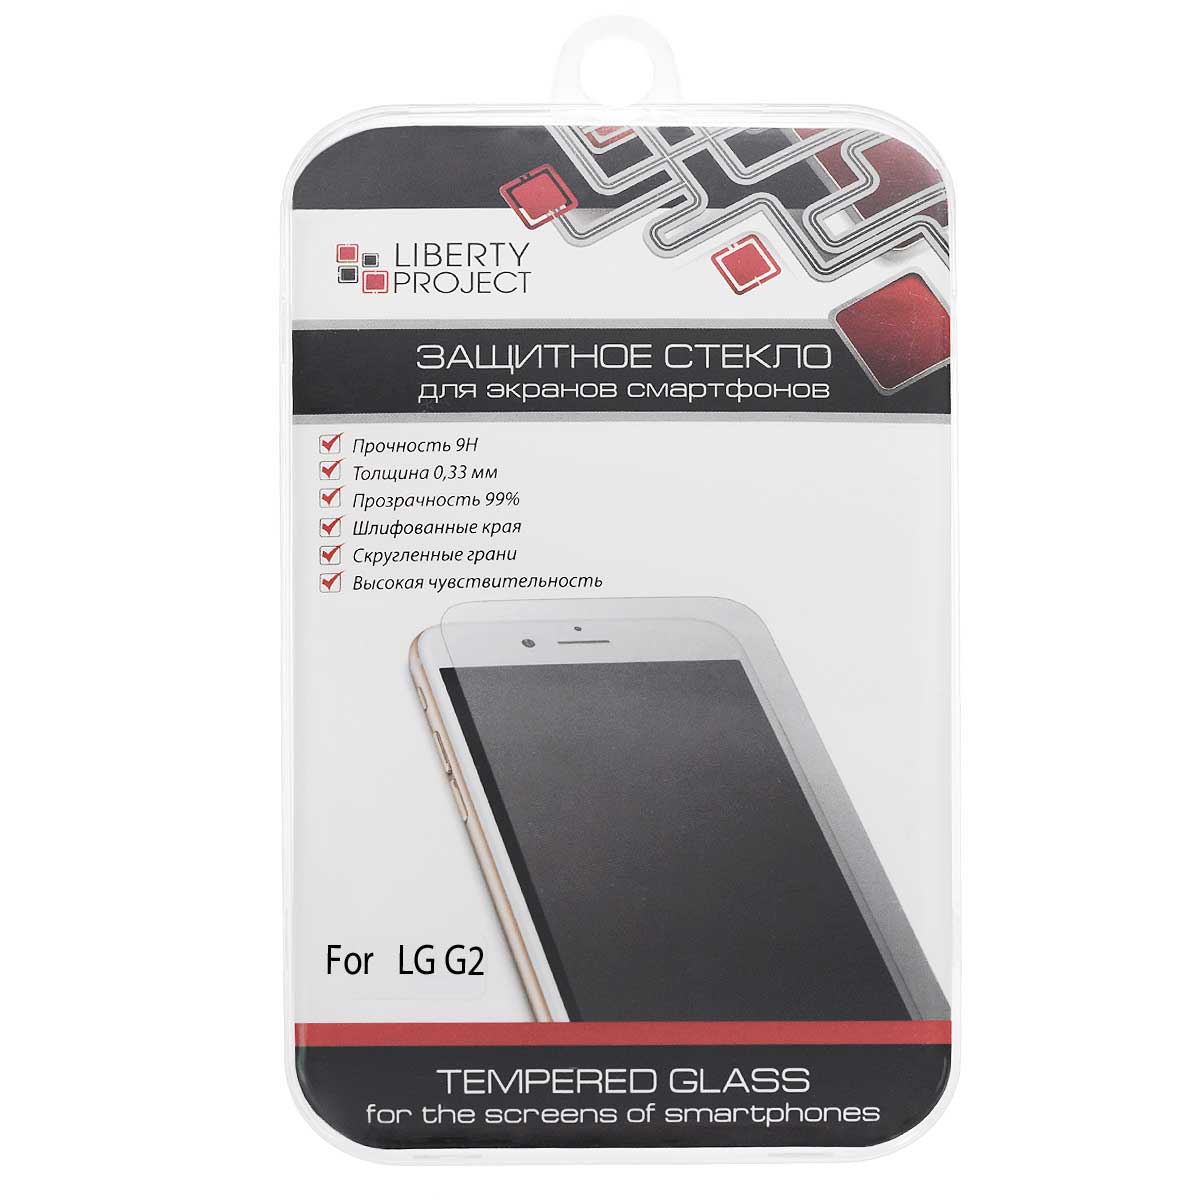 Liberty Project Tempered Glass защитное стекло для LG G2, Clear (0,33 мм)